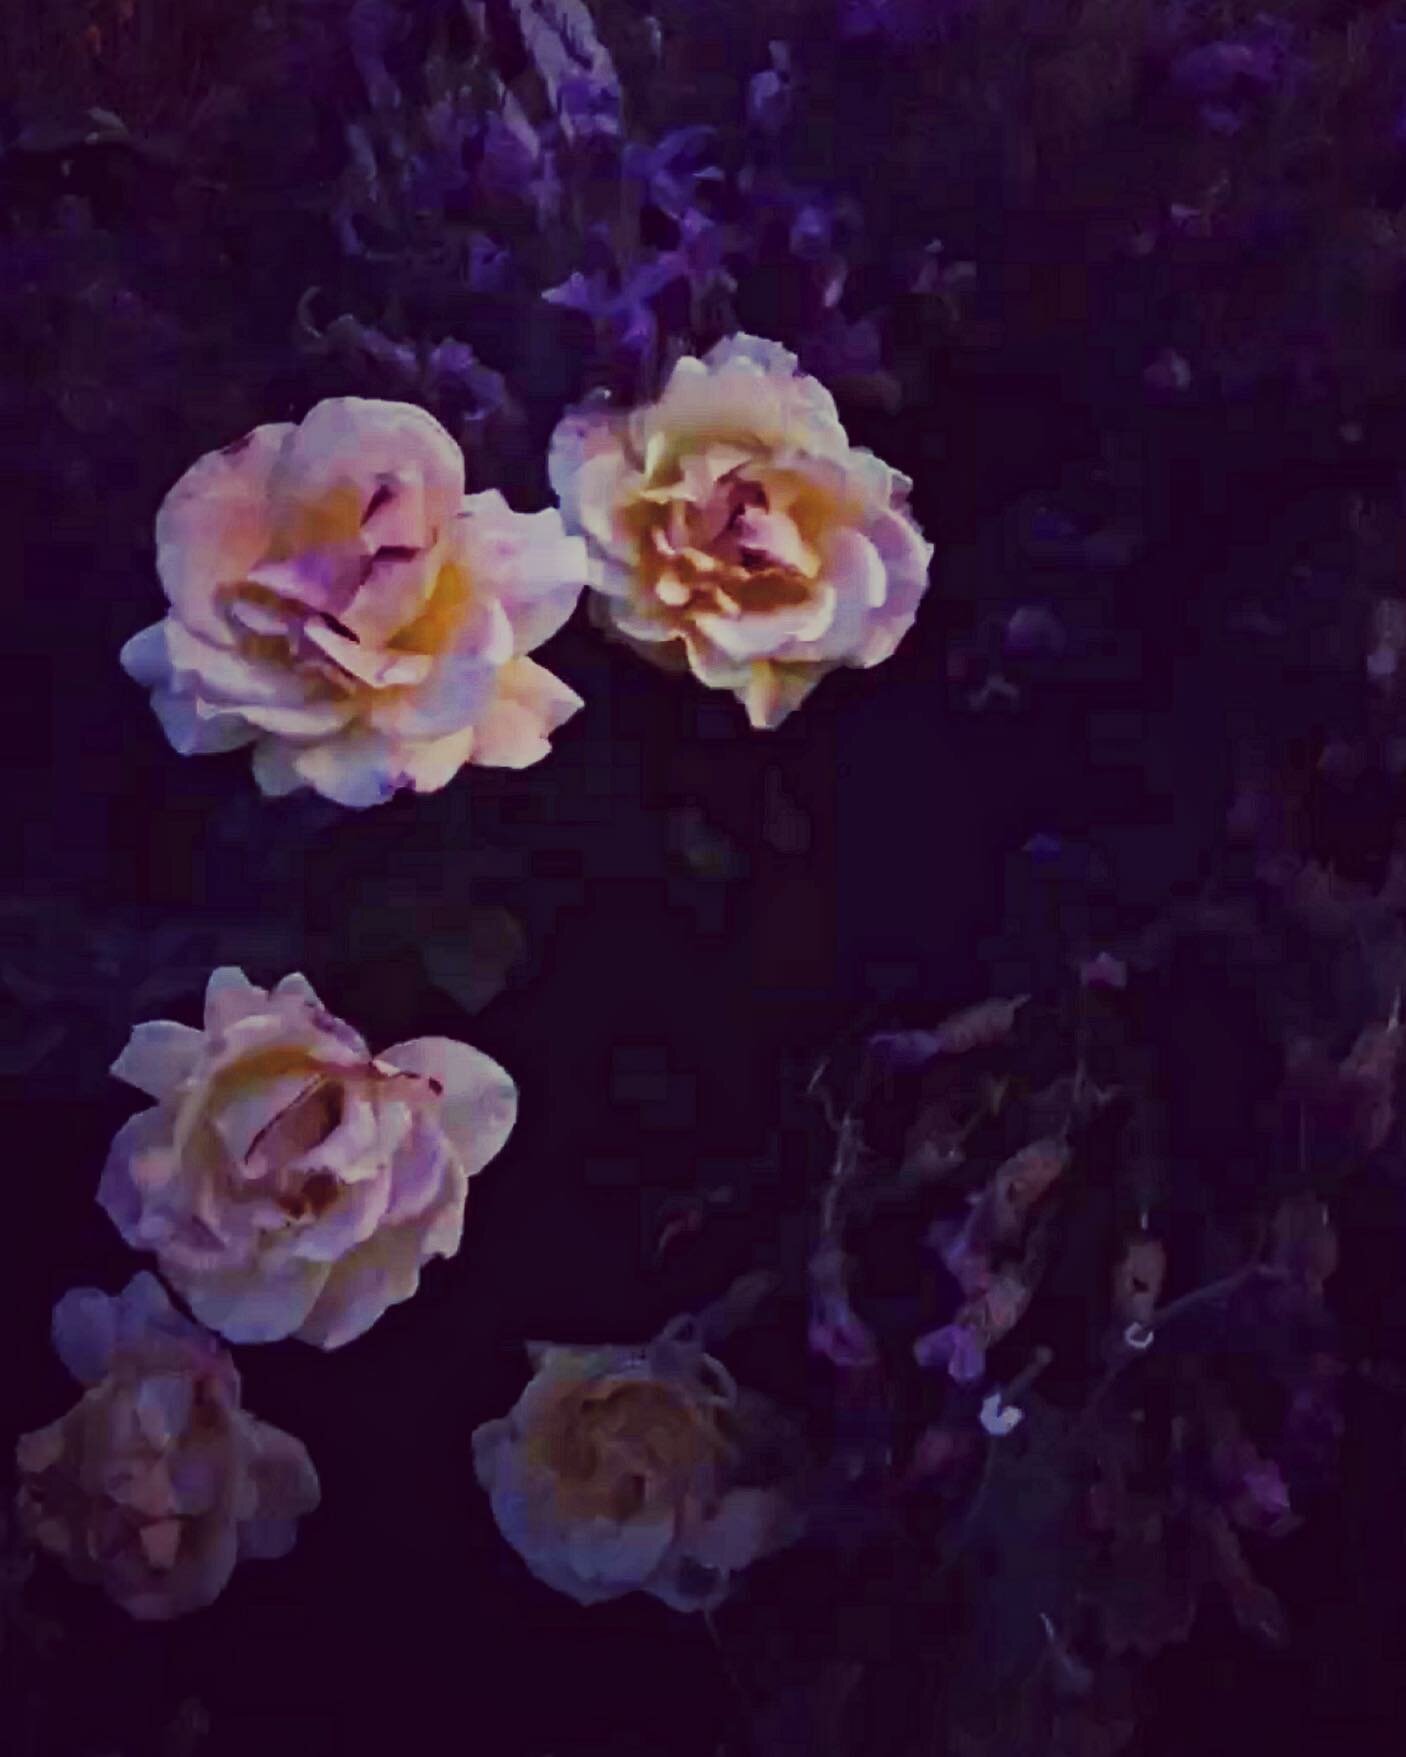 WILD NIGHTS, V. #calilove #nightphotography #flora #ranunculus #gardenrose